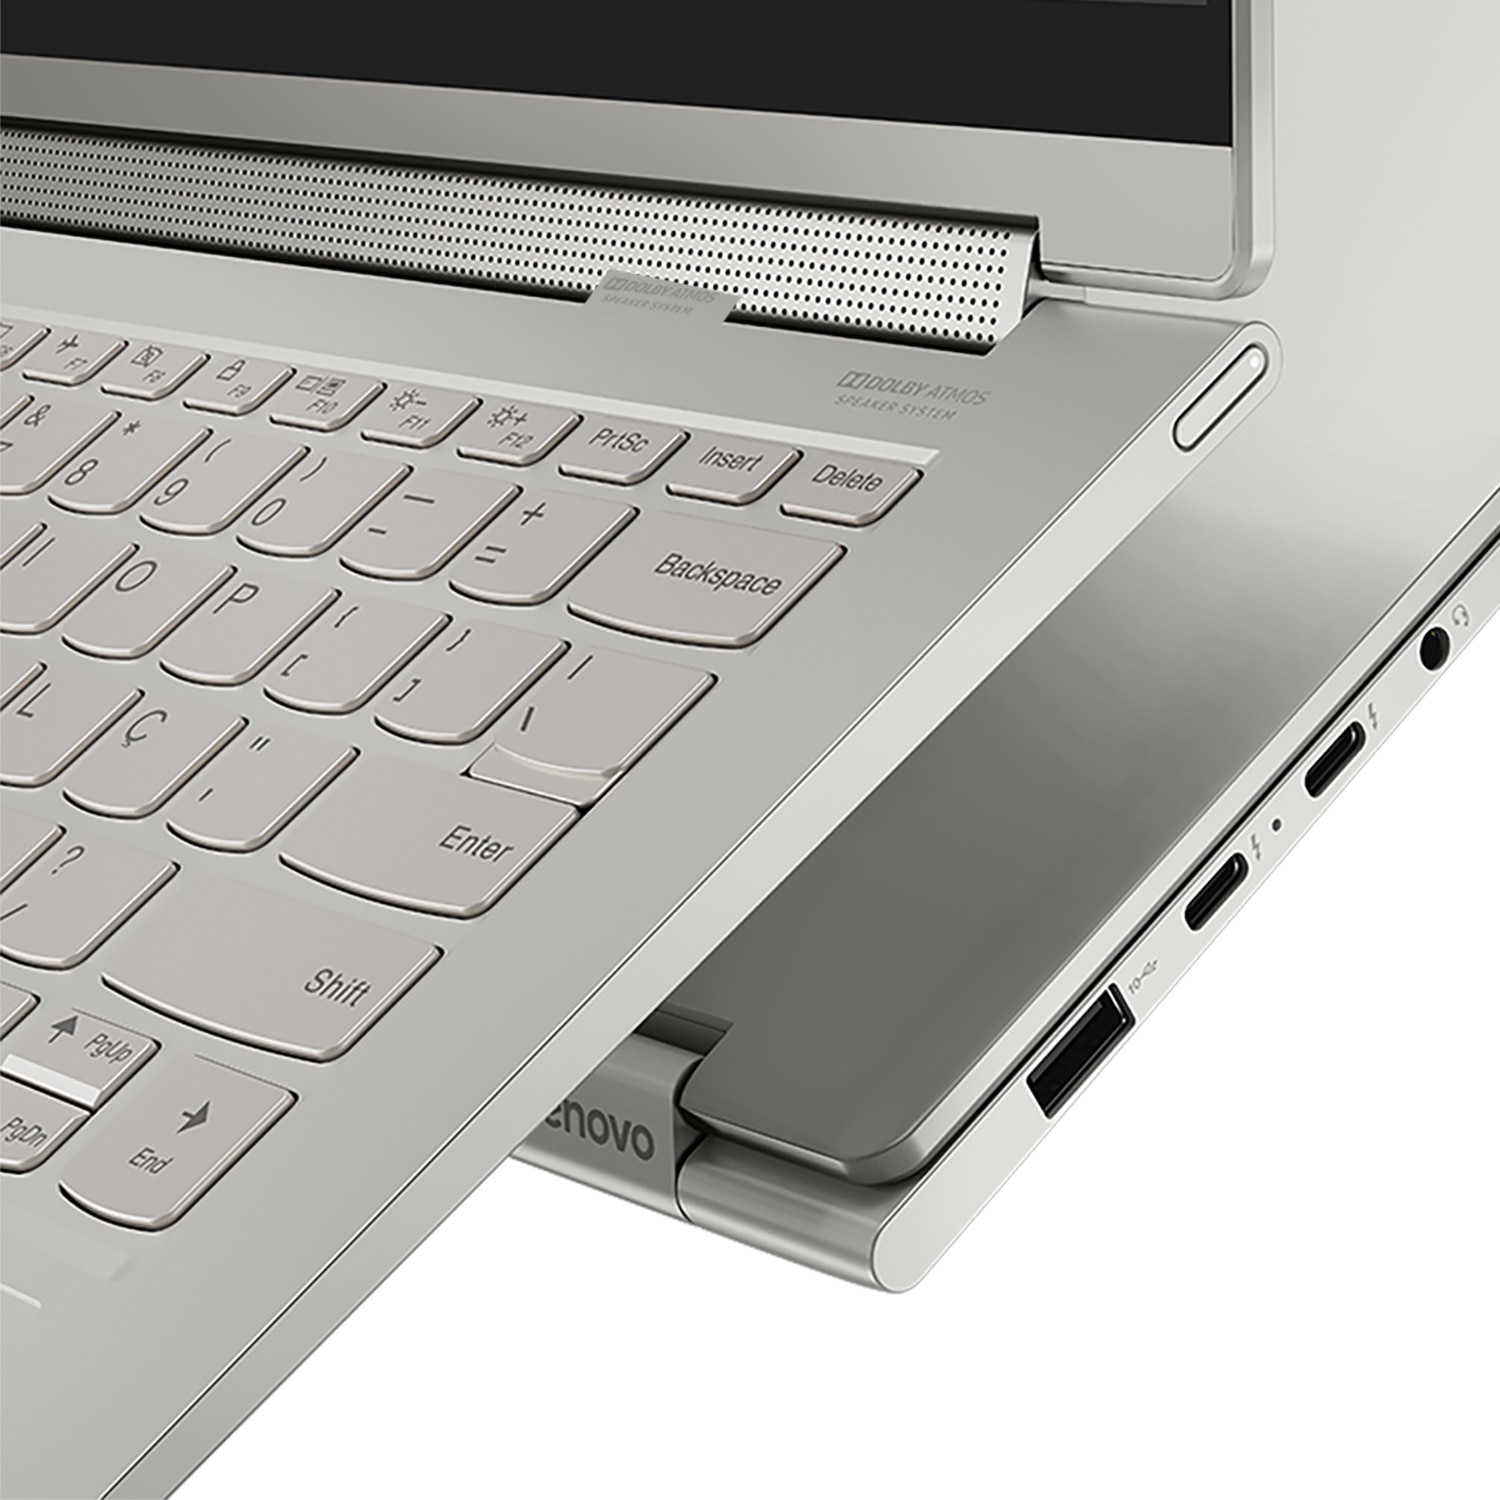 Notebook-Lenovo-Yoga-9i-4.jpg?context=bWFzdGVyfHJvb3R8NTY3ODI4fGltYWdlL2pwZWd8aDU2L2hjZi8xMTU5ODk1MjE2OTUwMi5qcGd8YzkzNDEyZmQ4NDY1YWFjNzgxYWZkZDljMjUwYmRiY2FkOTk3M2M0MjdhOTE5MjkwOTc4NmFhOWIzYTllZDFkNg